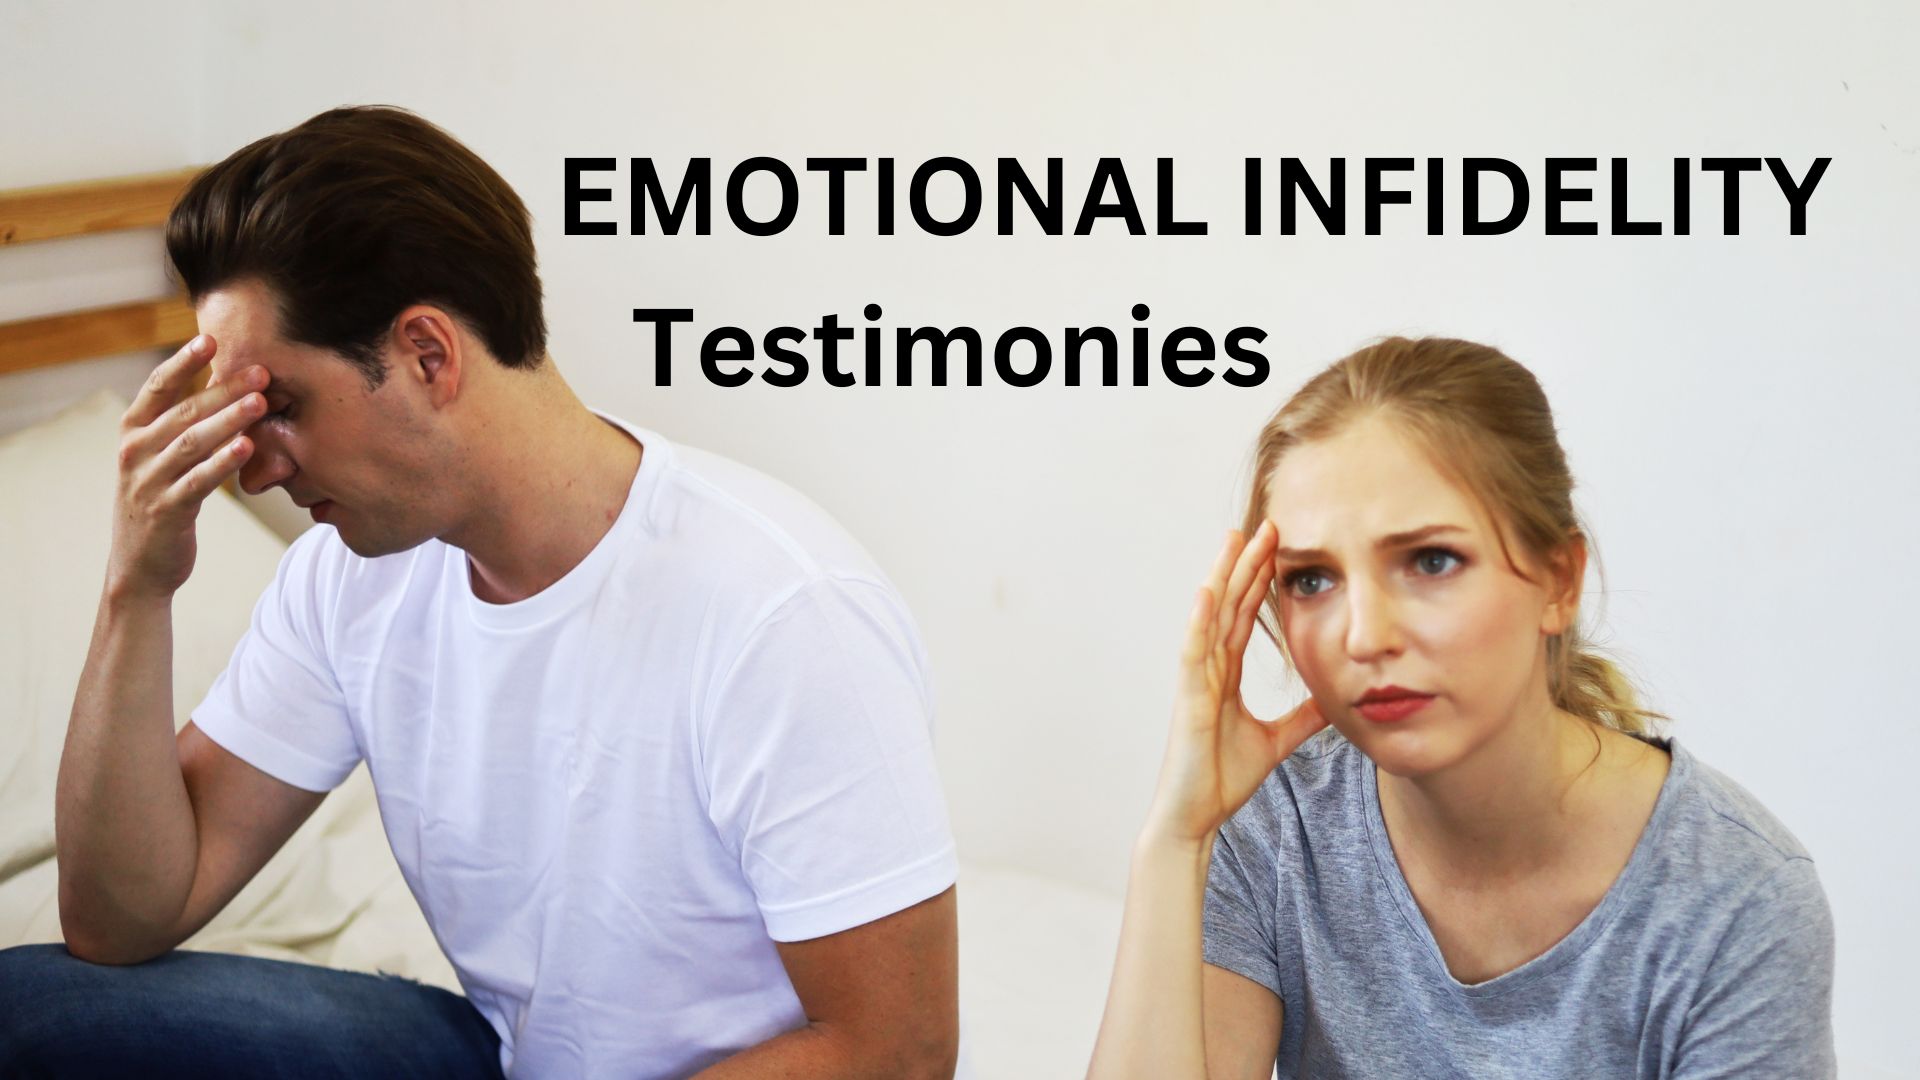 Emotional Infidelity Testimonies - Adobe Stock